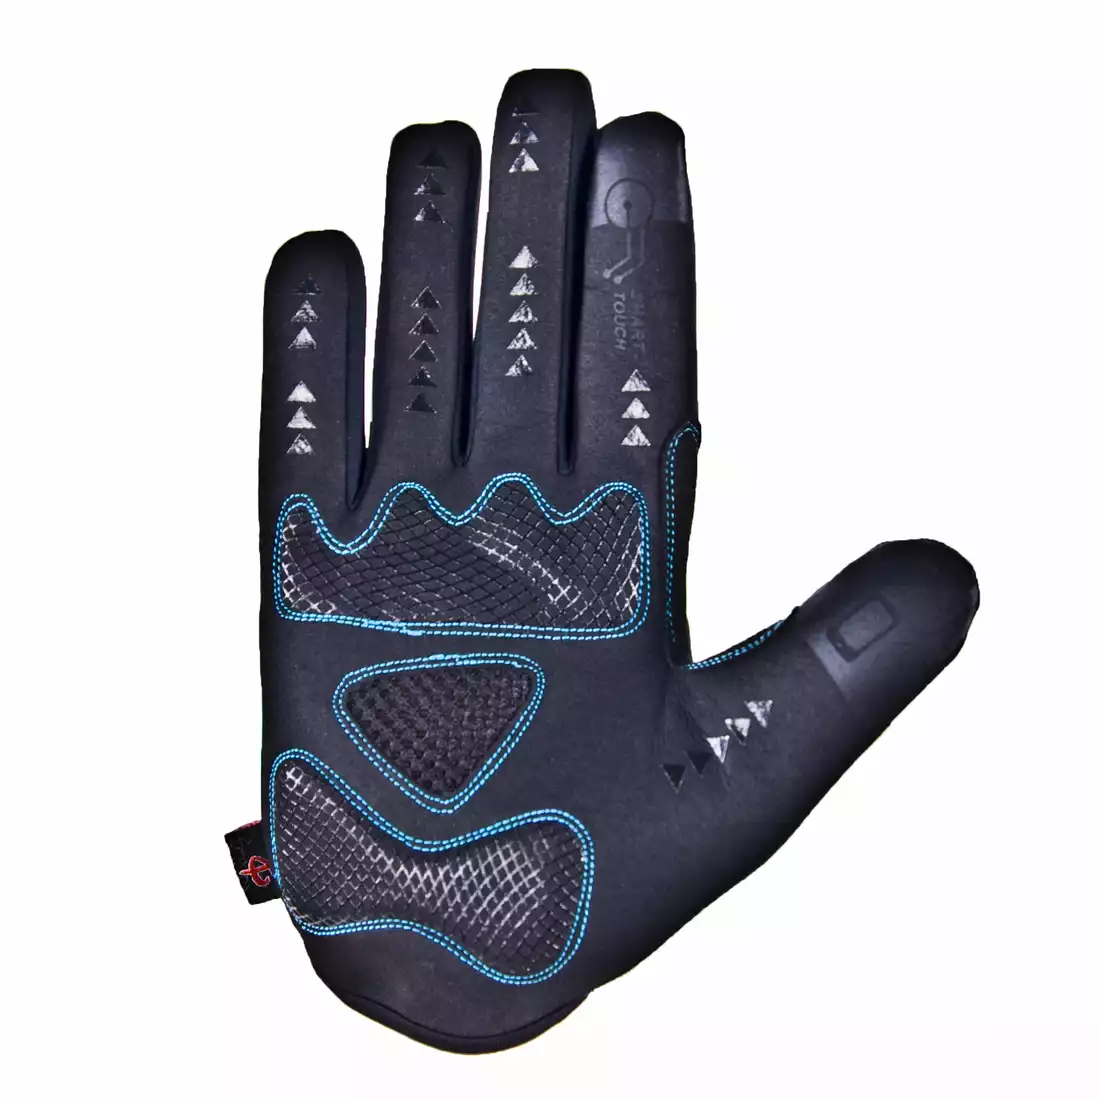 DEKO ROST zimowe rękawice rowerowe czarno-niebieskie DKWG-0715-006A 